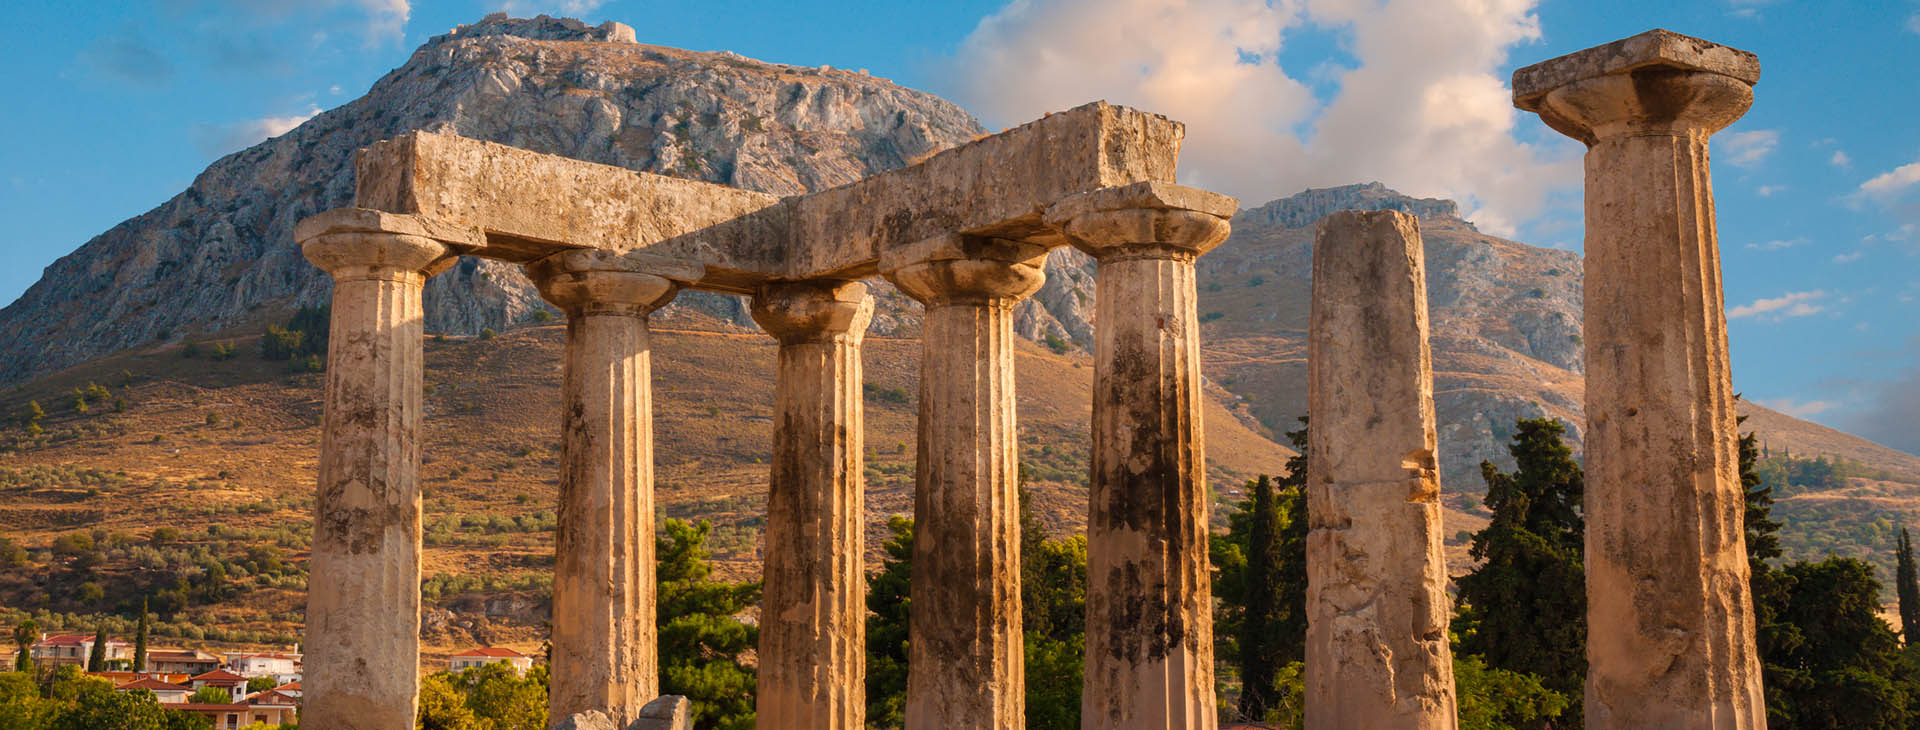 Apollo Temple at ncient Corinth, Corinthia